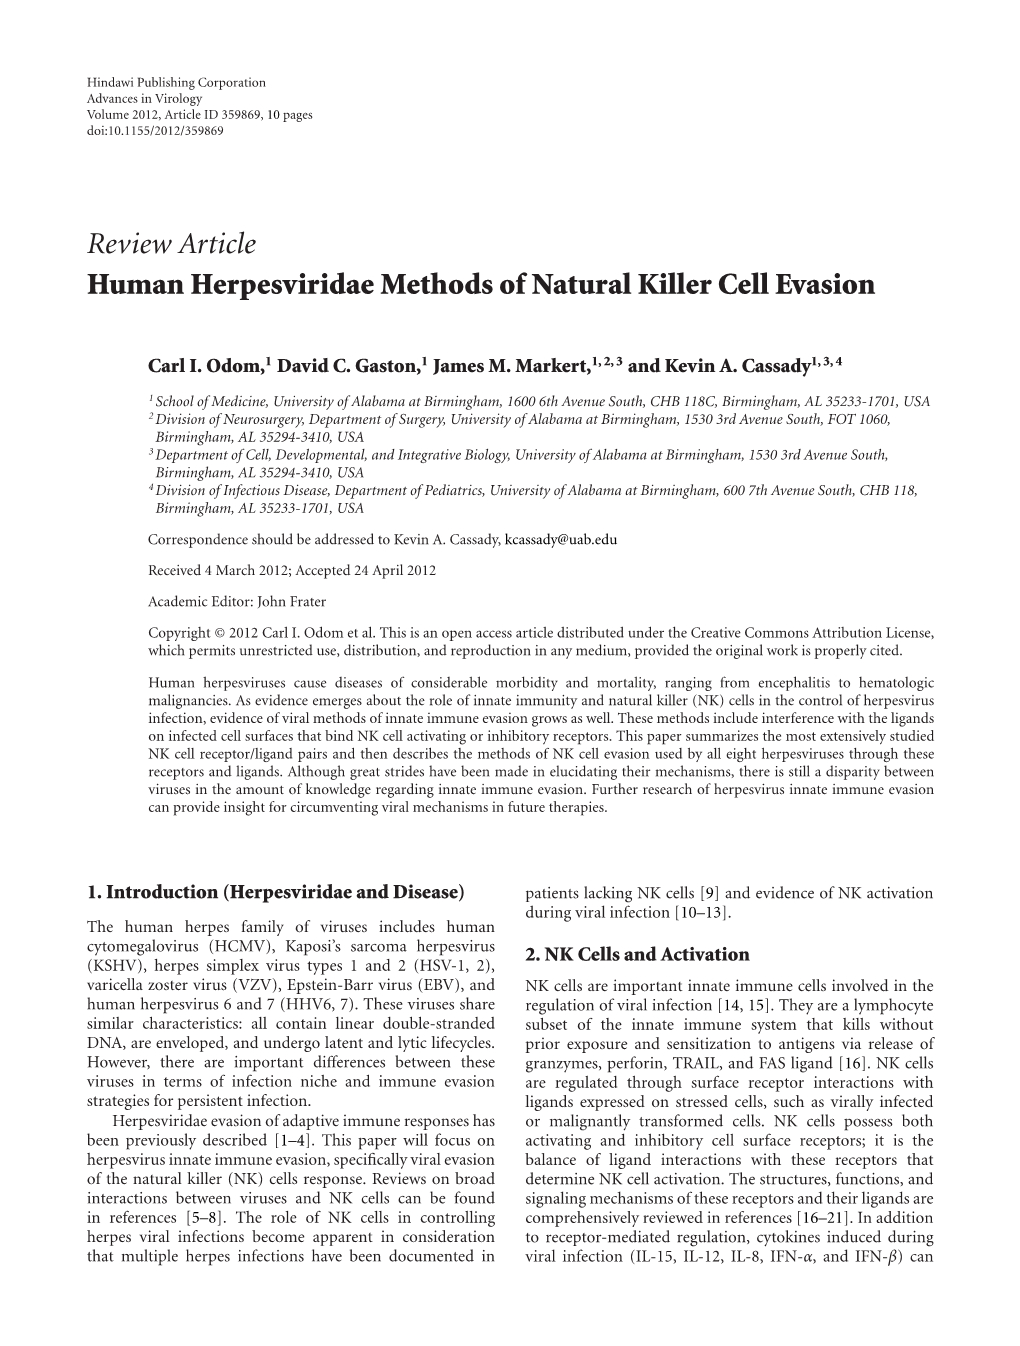 Review Article Human Herpesviridae Methods of Natural Killer Cell Evasion